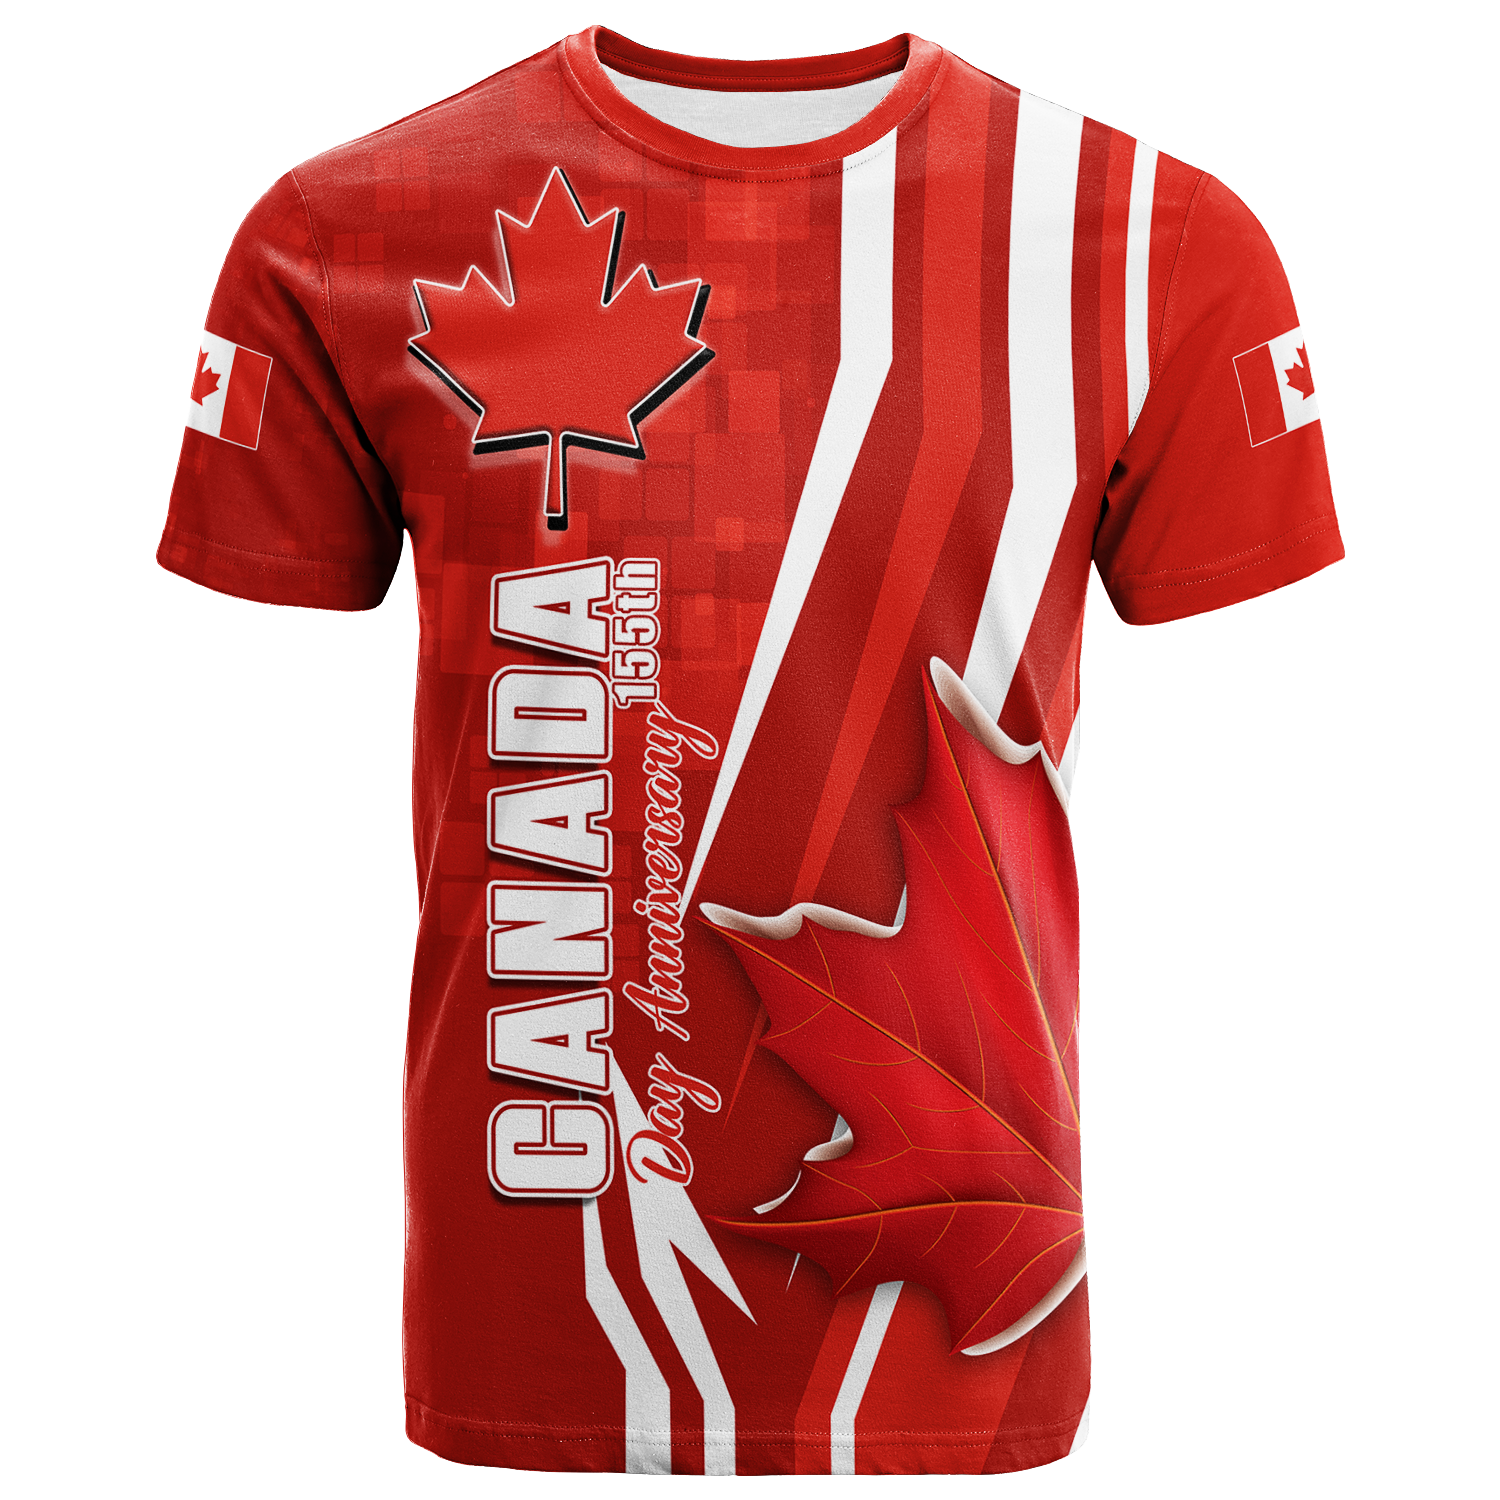 canada-day-anniversary-pride-t-shirt